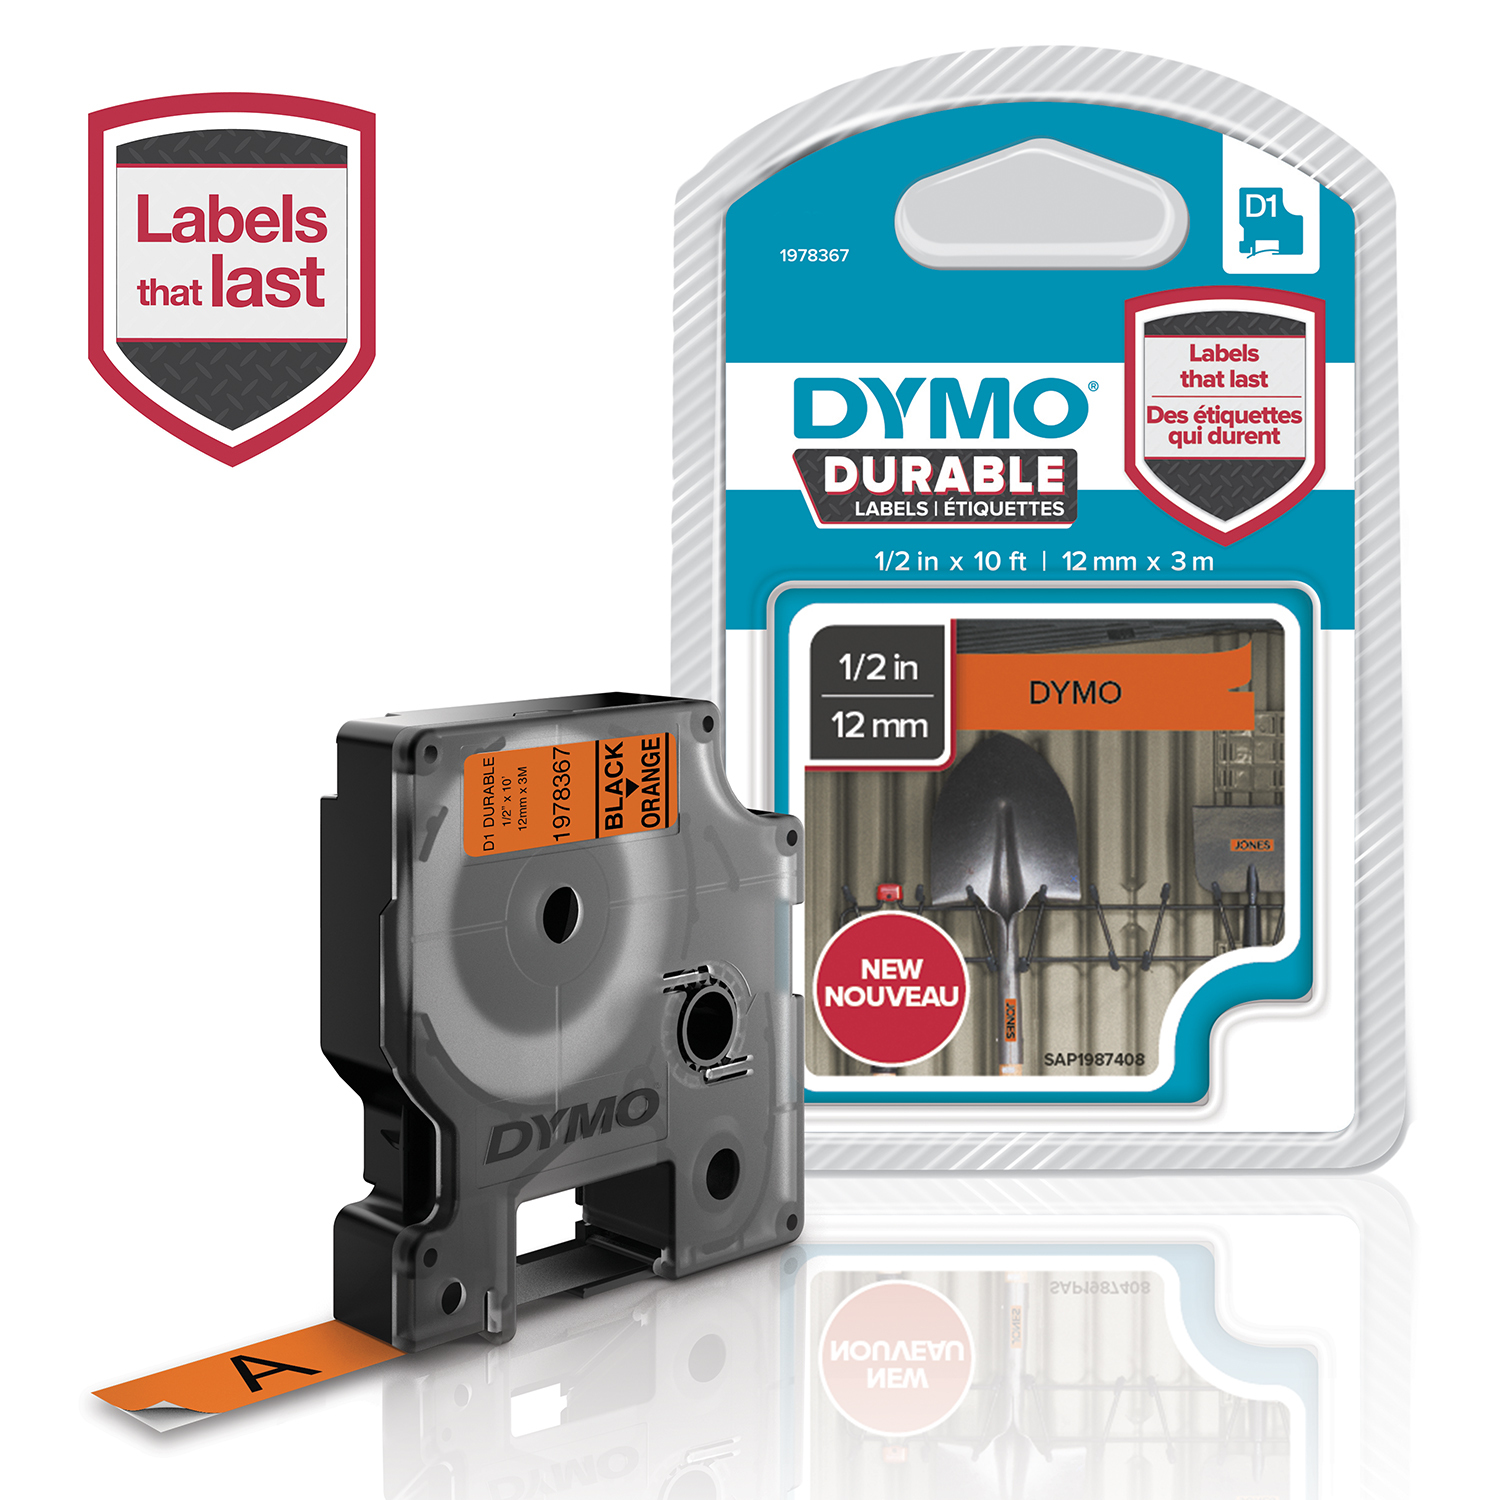 DYMO D1® -Durable Labels - White on Orange - 12mm x 3m